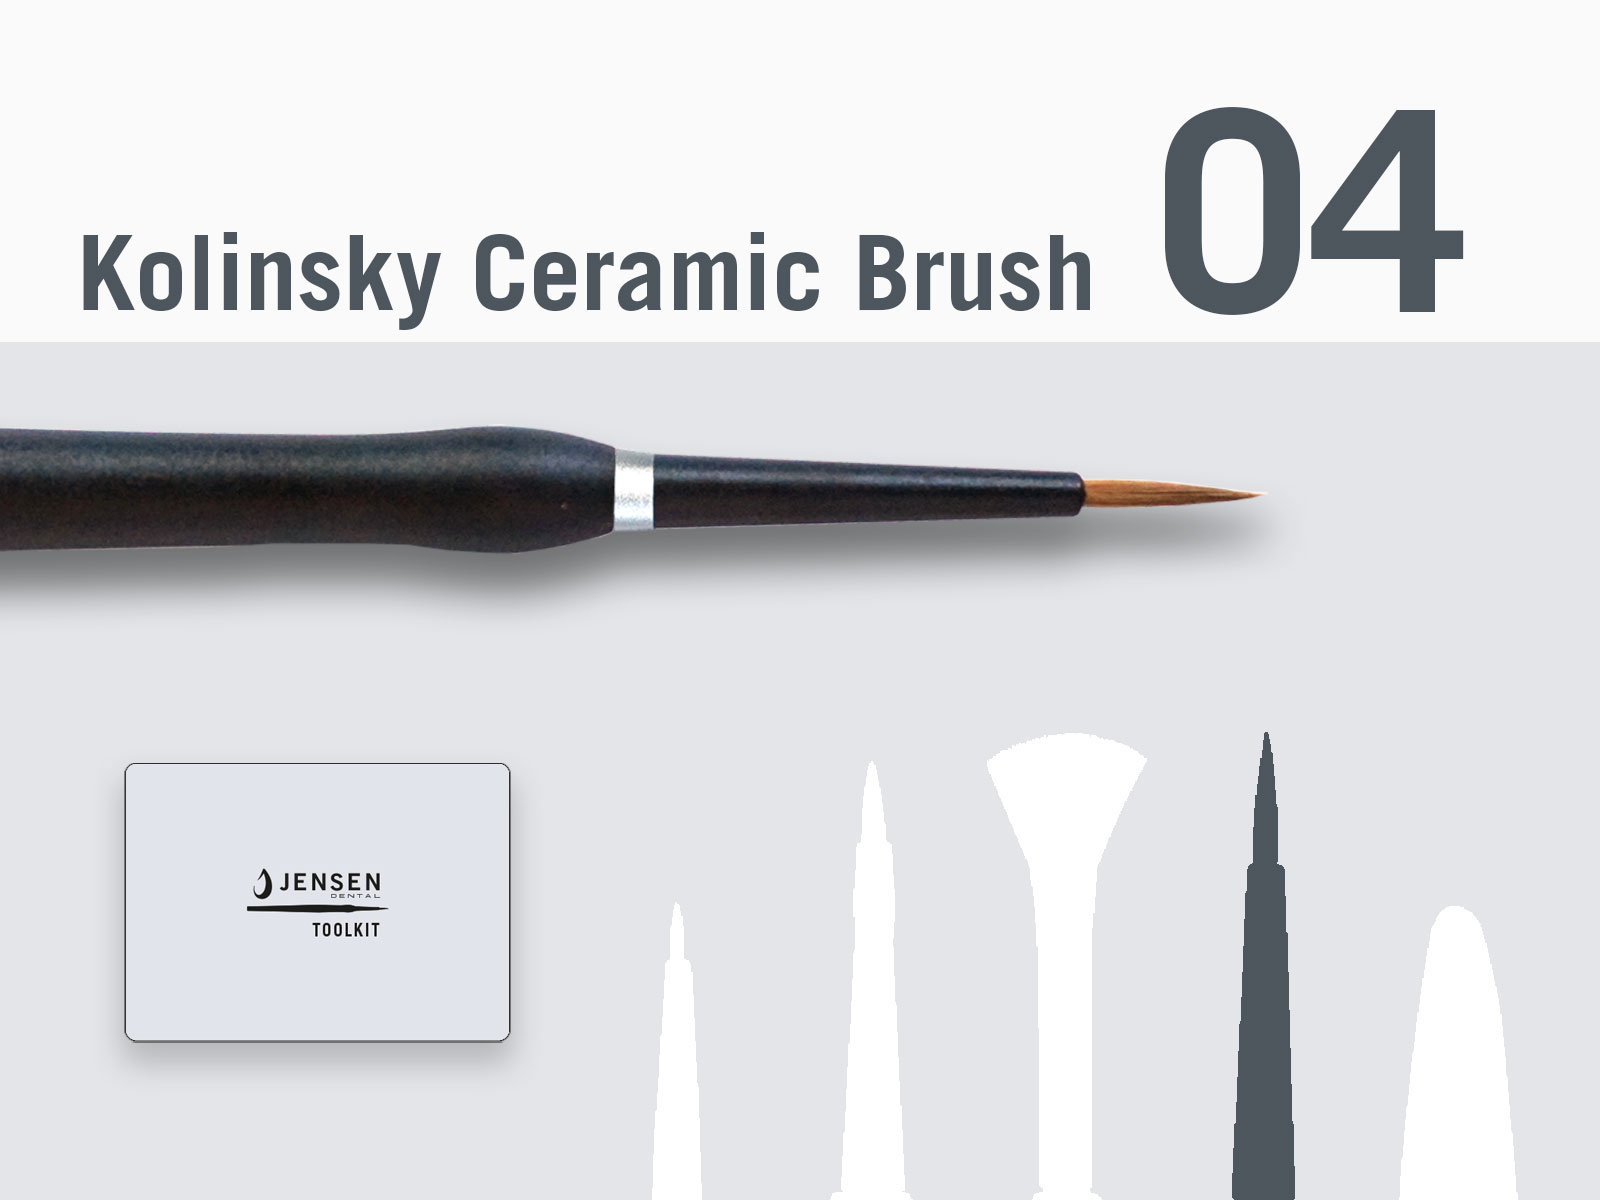 Kolinsky Ceramic brush with replaceable brush tip